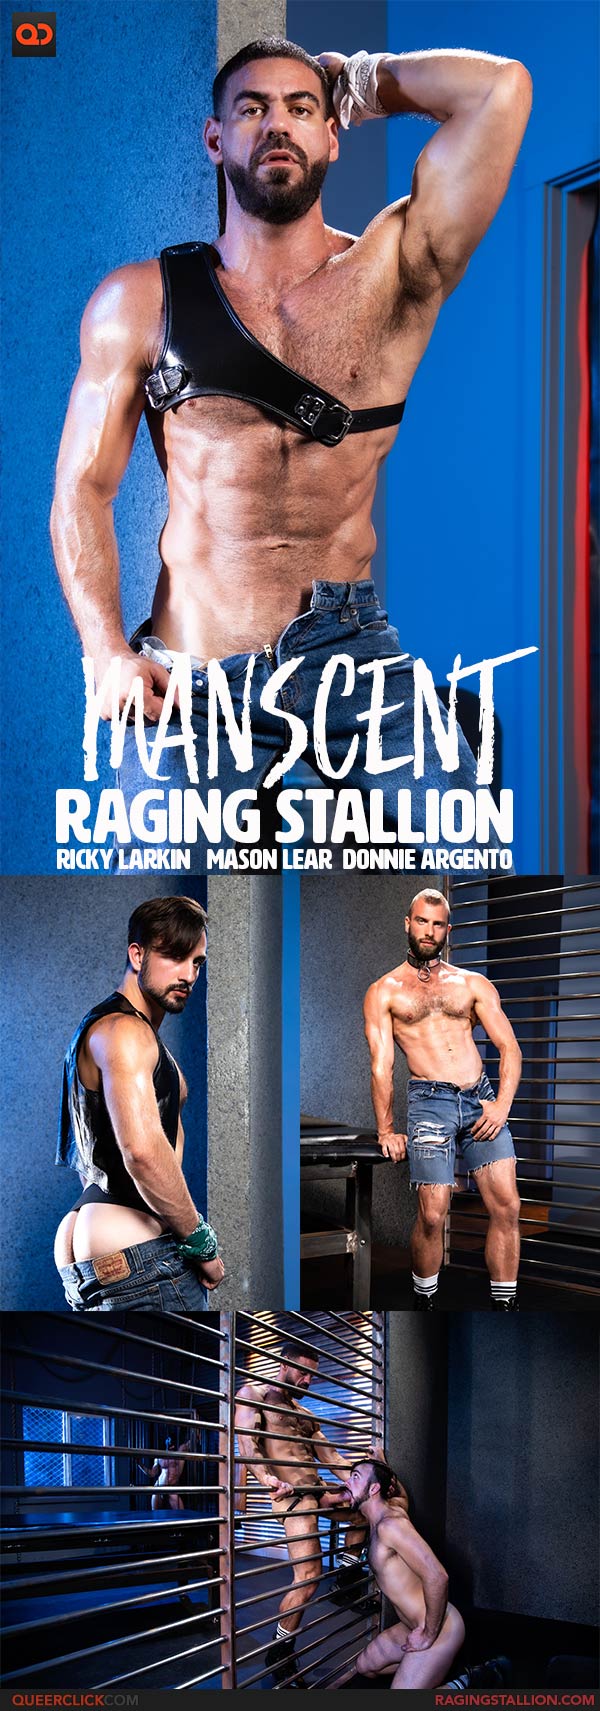 Raging Stallion:  Ricky Larkin, Mason Lear and Donnie Argento